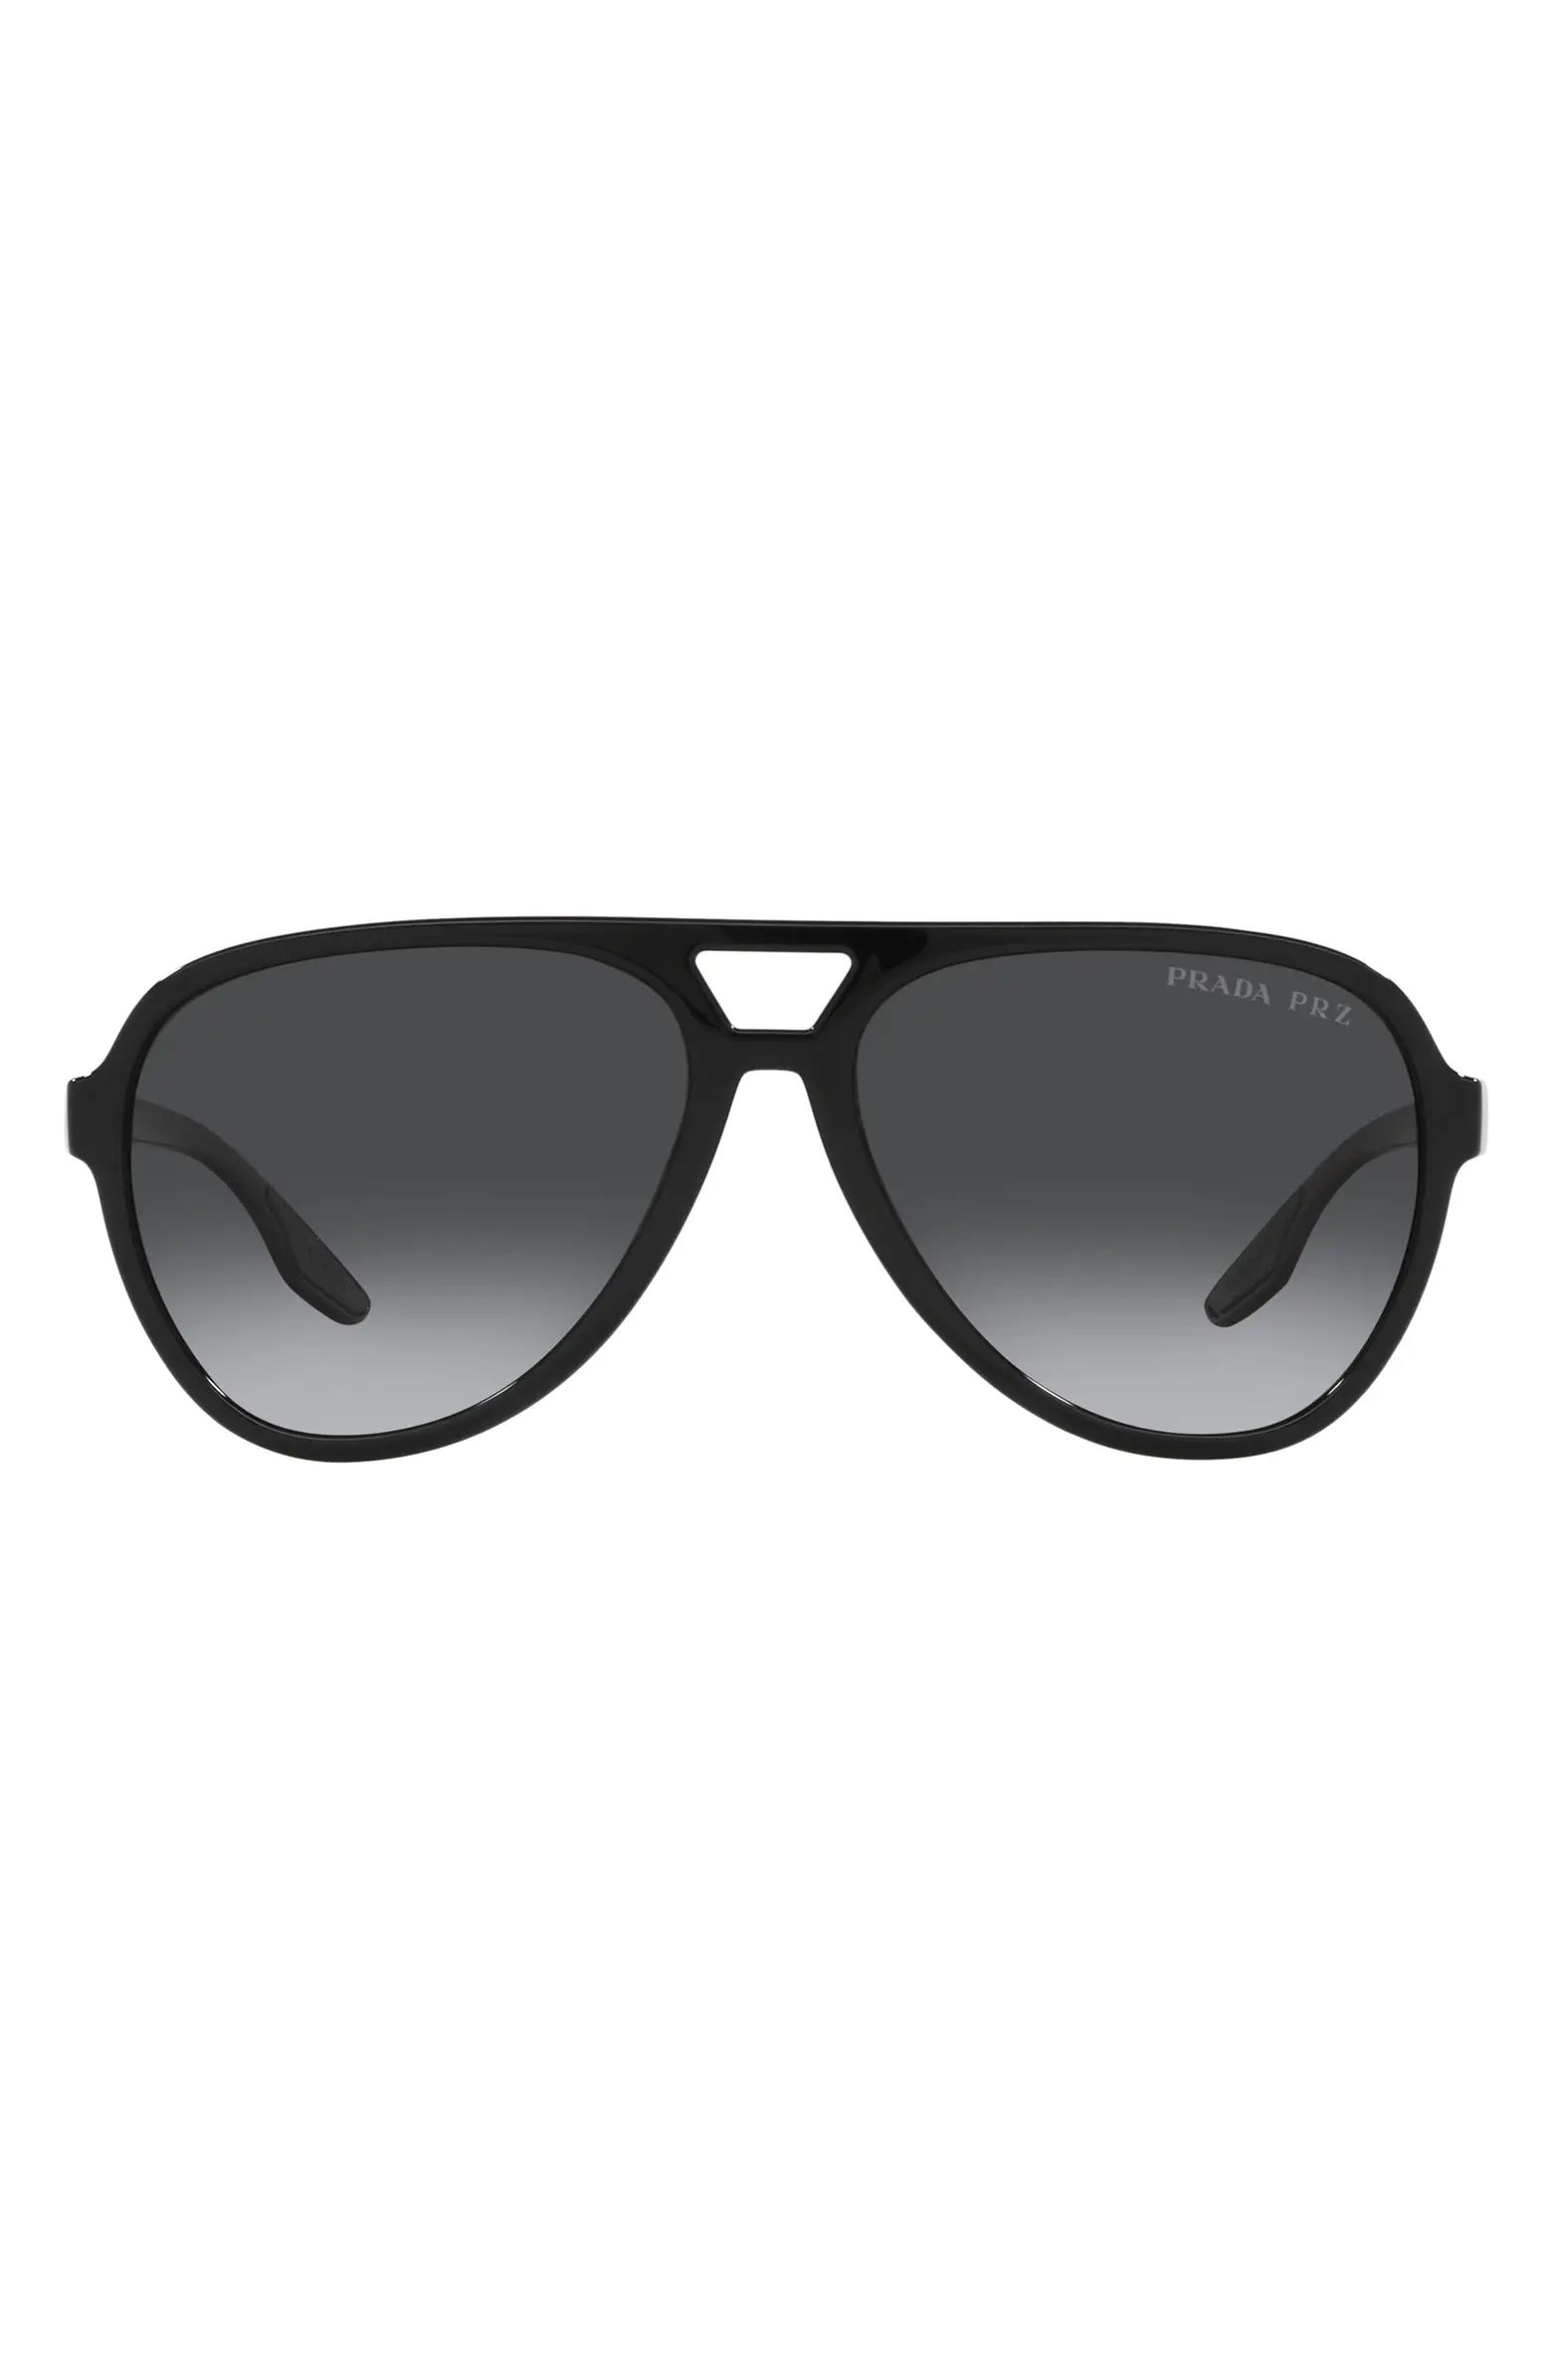 PRADA SPORT 59mm Gradient Polarized Pilot Sunglasses | Nordstrom | Nordstrom